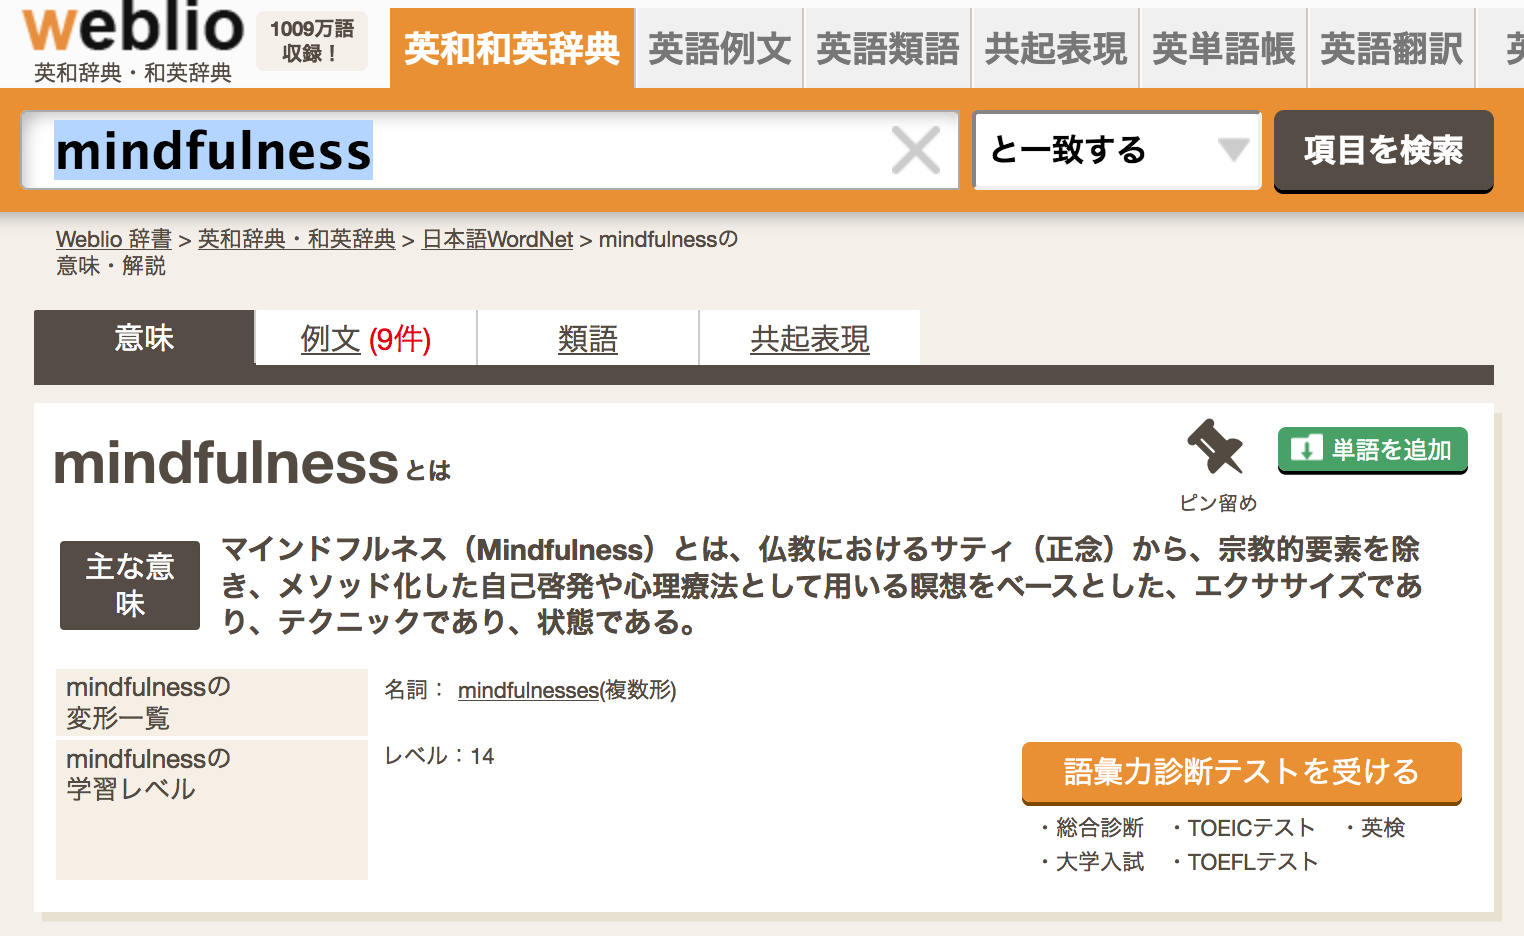 ("mindfulness" searched on weblio.jp)